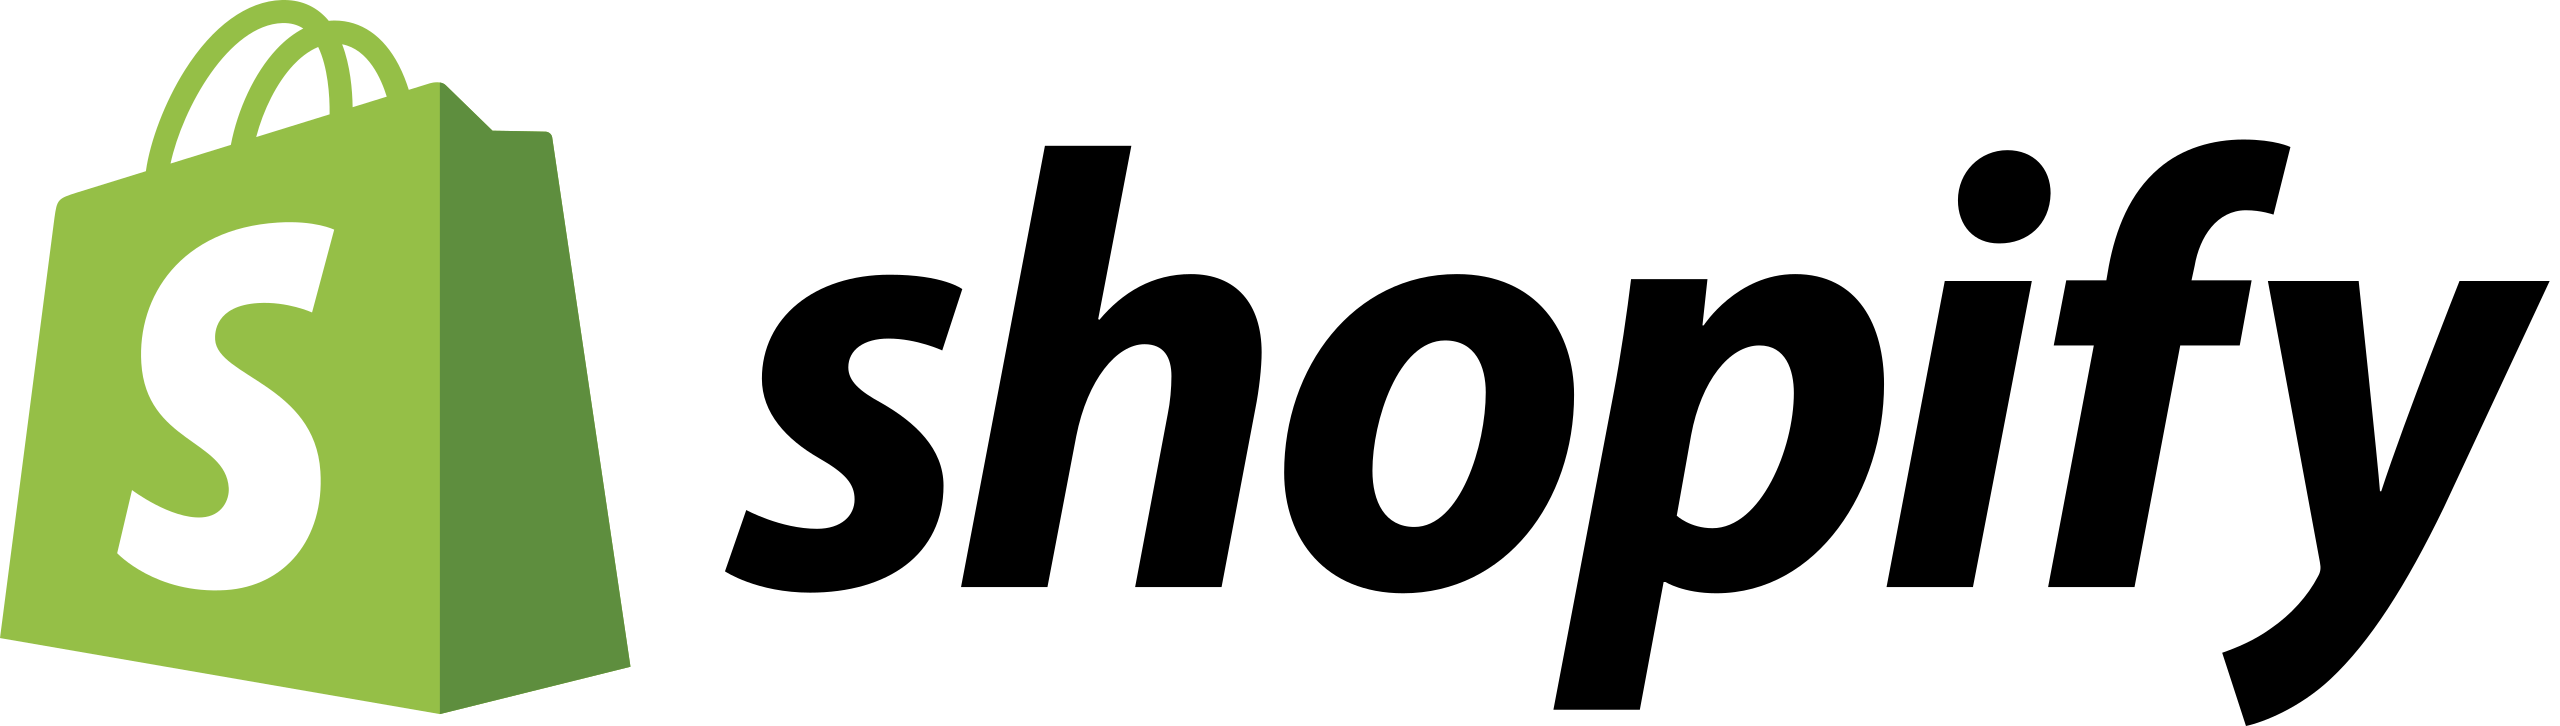 Logo de plataforma de ecommerce Shopify